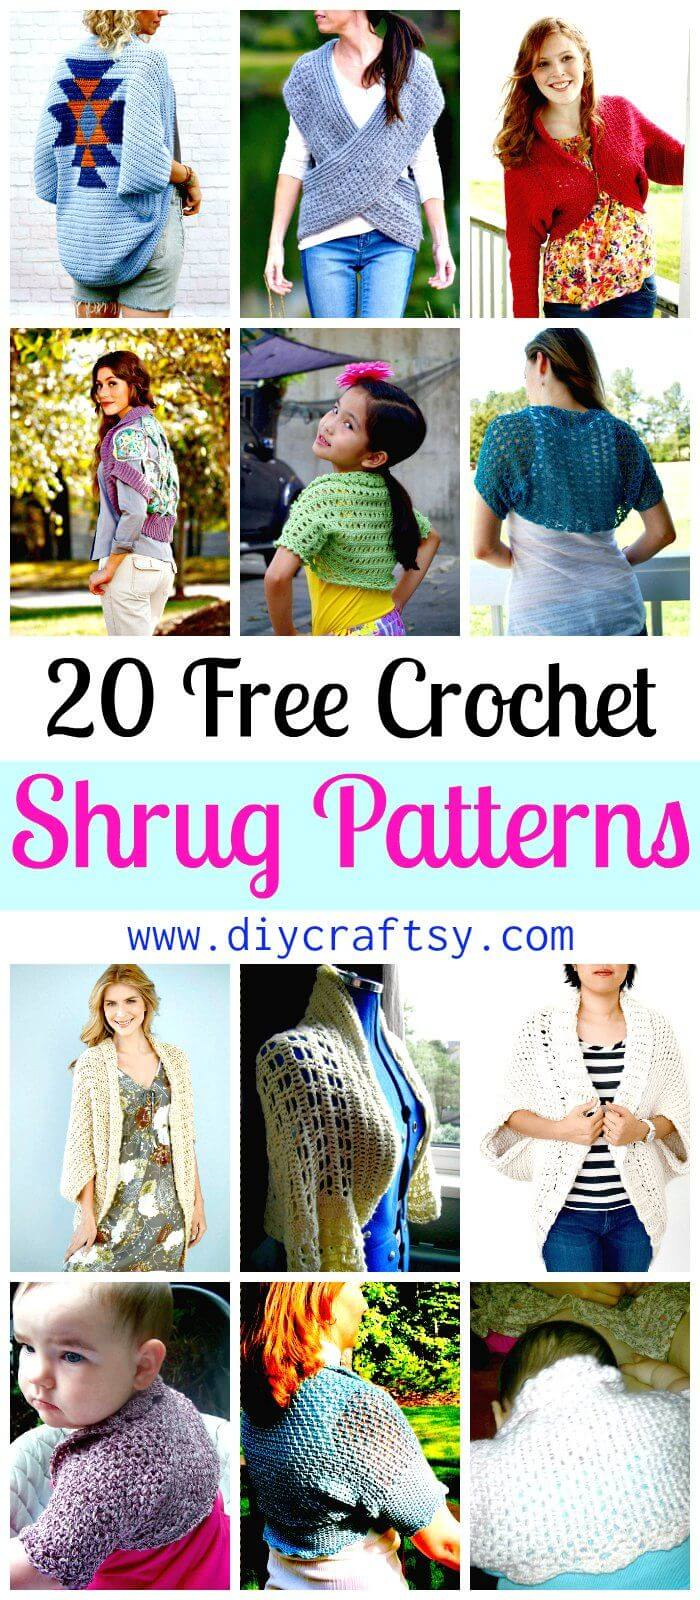 Free Crochet Shrug Patterns Crochet Shrug Patterns 20 Free Unique Designs Diy Crafts